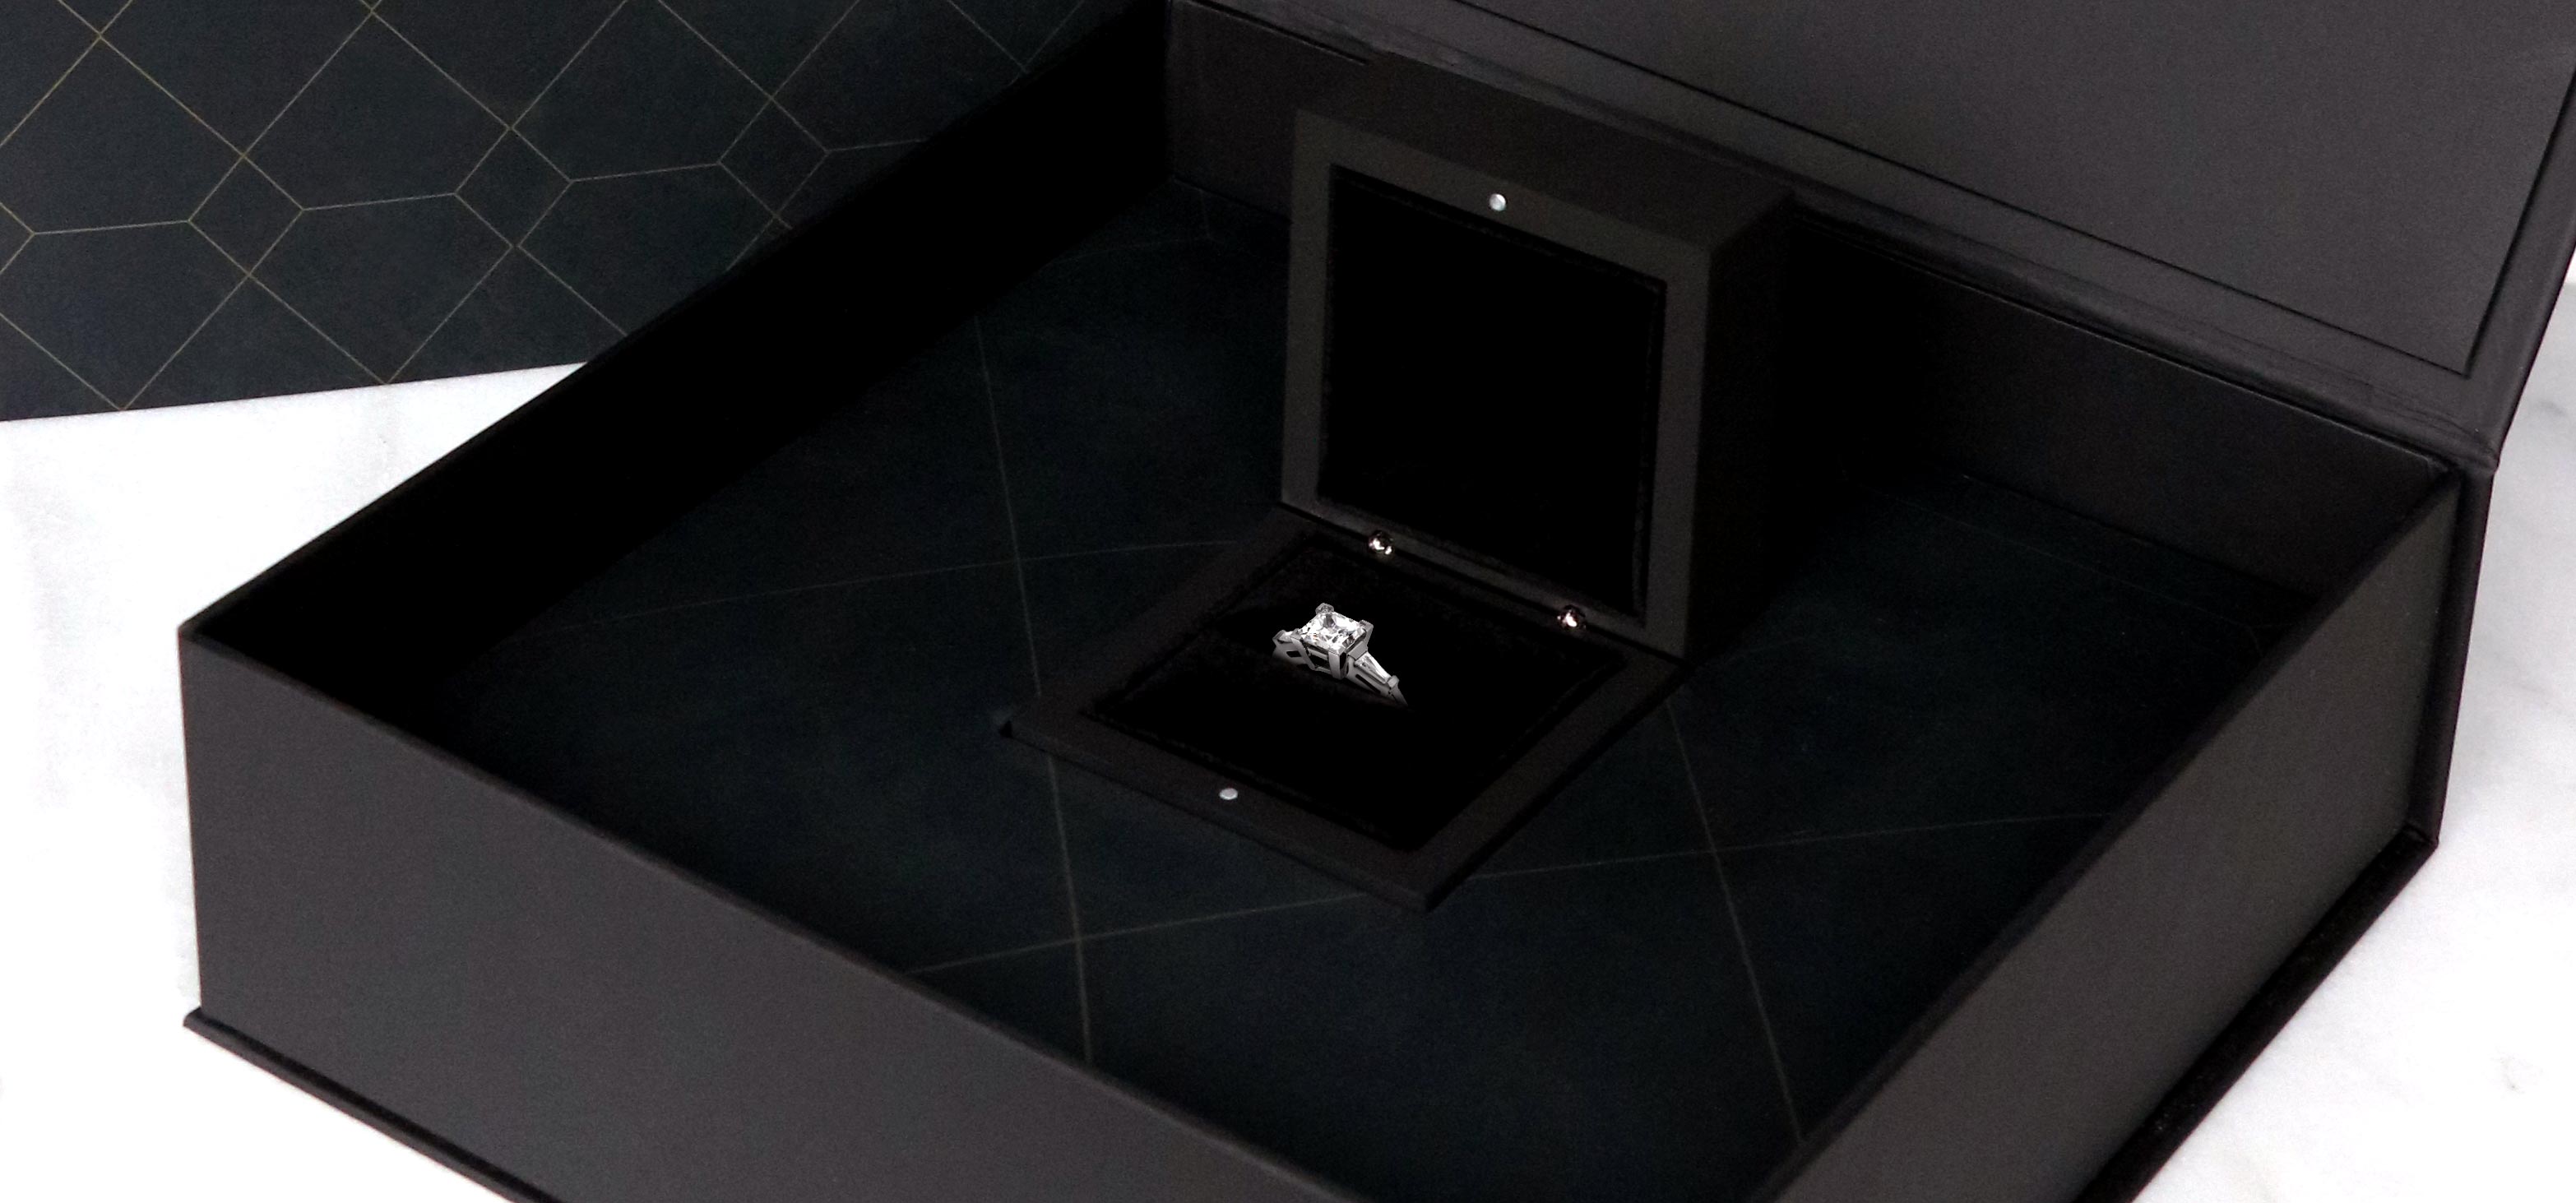 Diamond Nexus engagement ring shown in black, luxury packaging